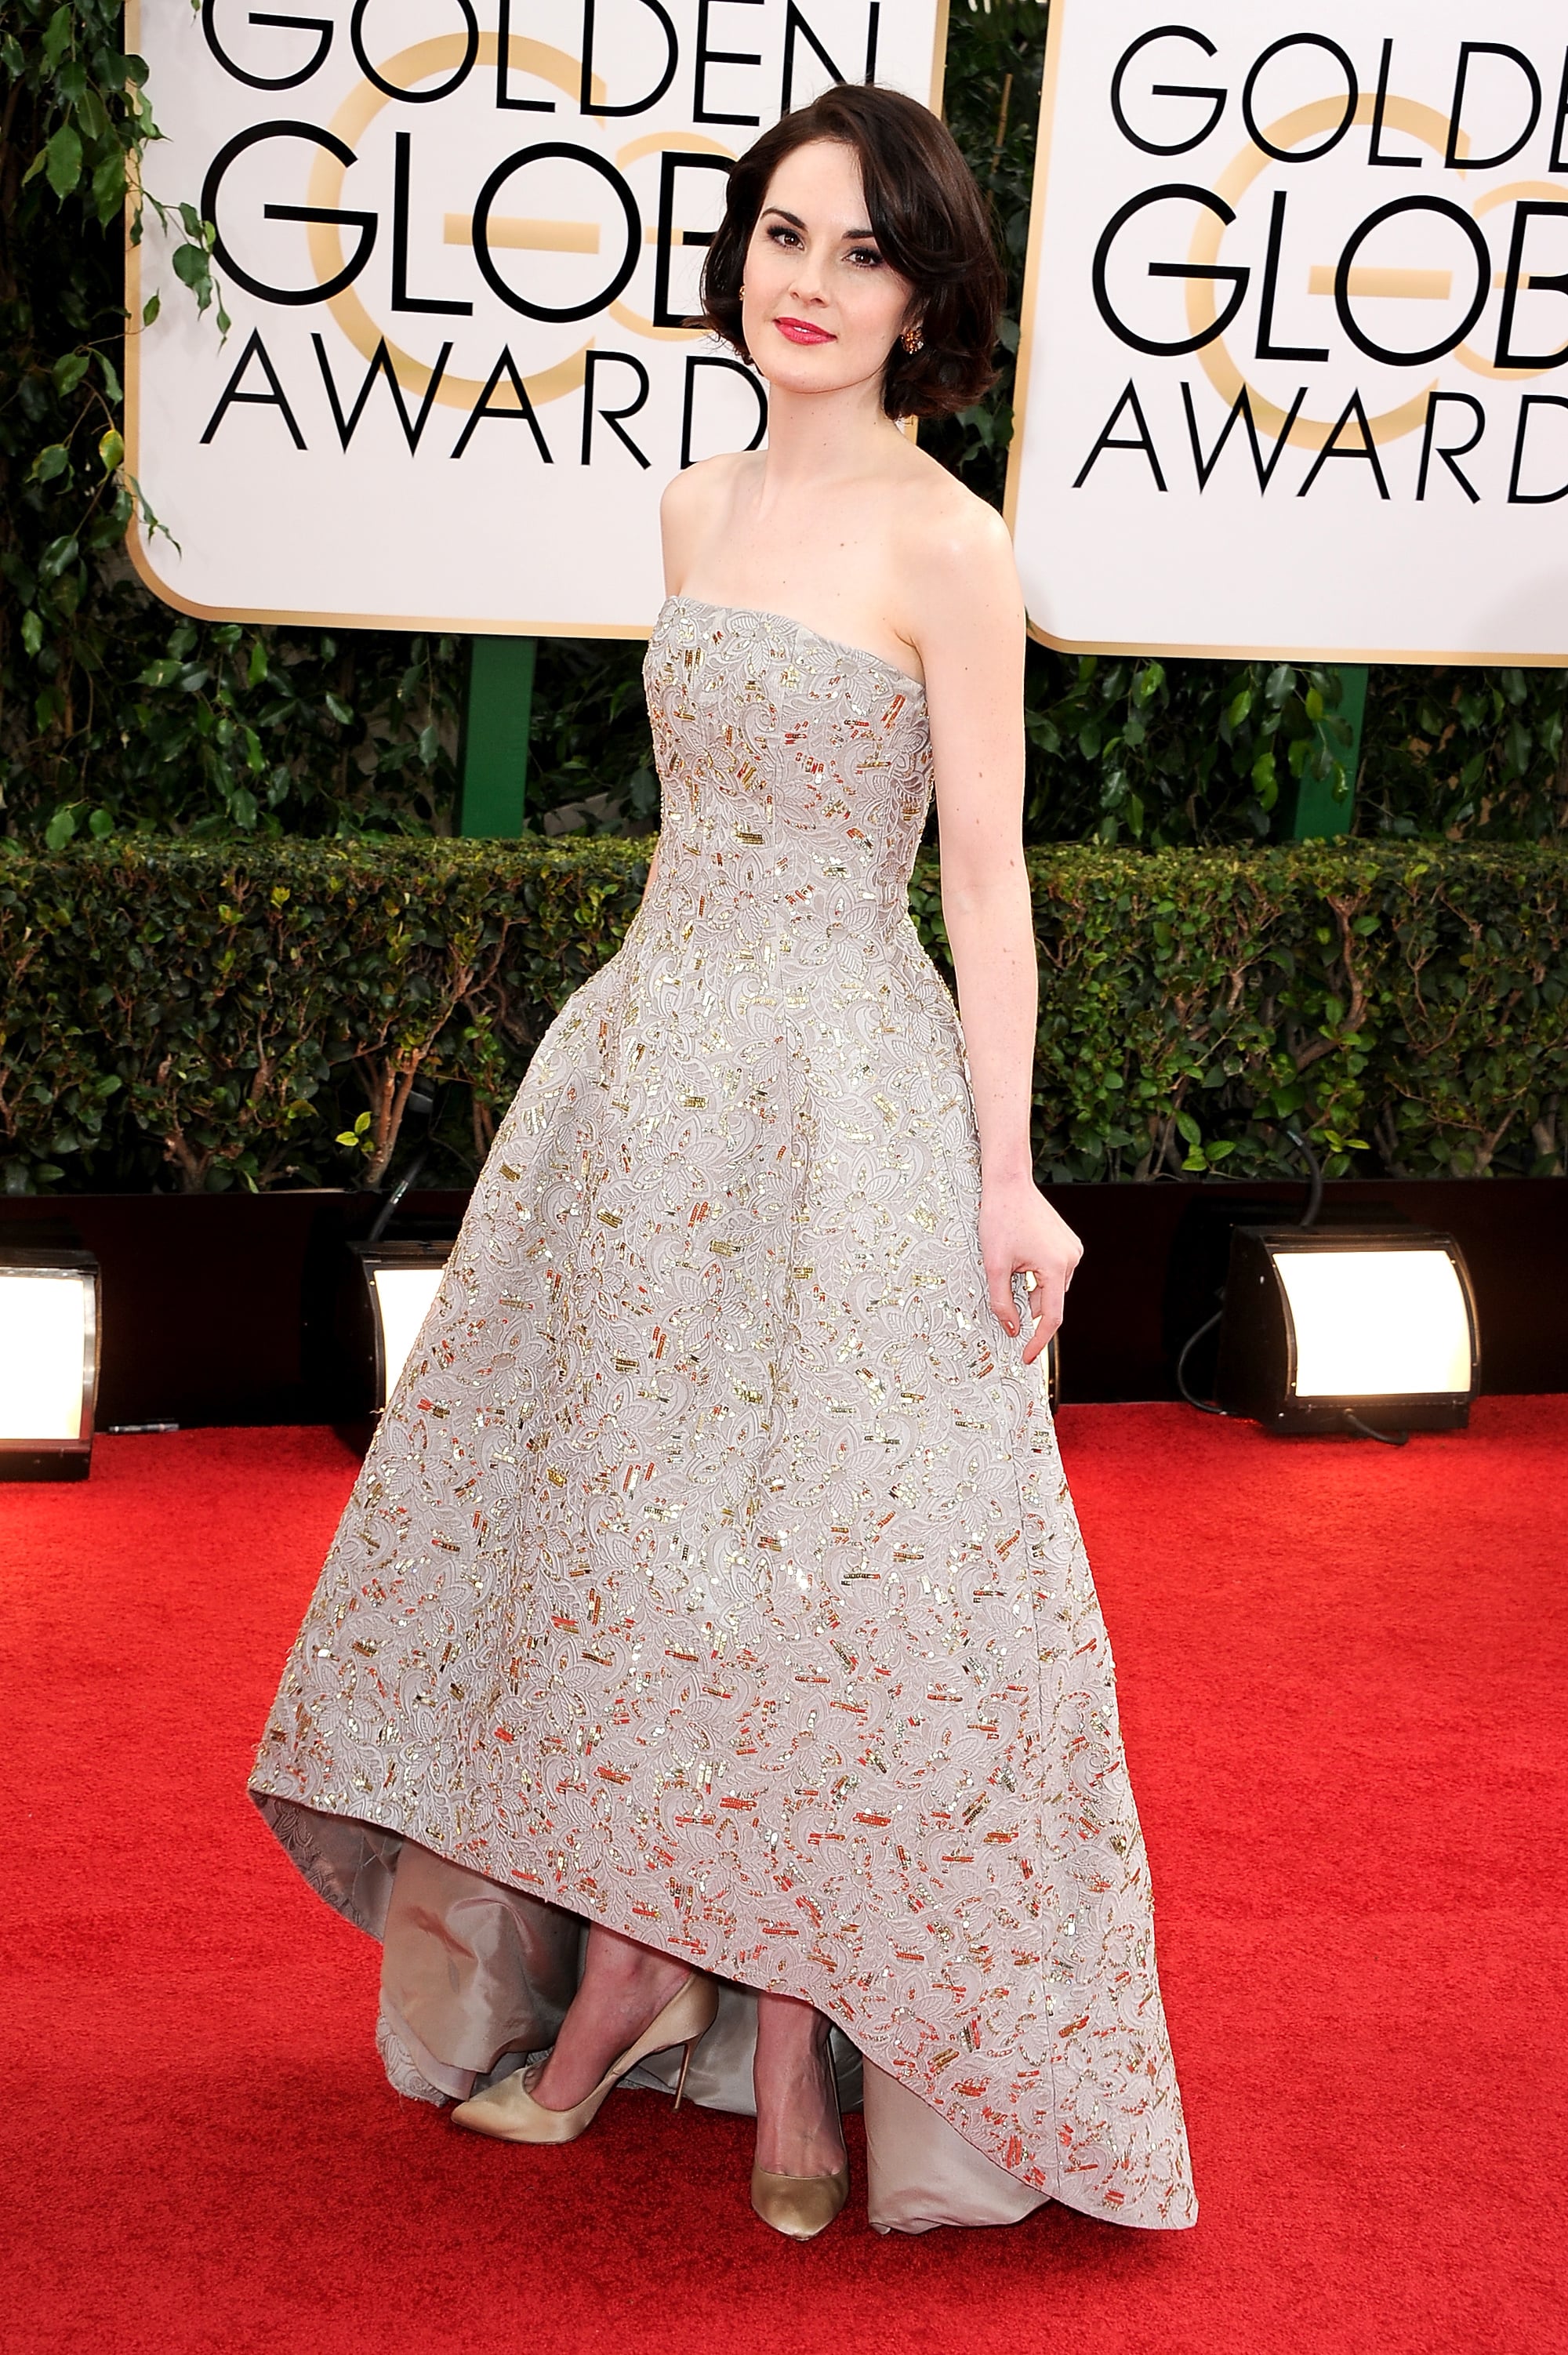 Michelle Dockery Dress on Golden Globes 2014 Red Carpet | POPSUGAR Fashion